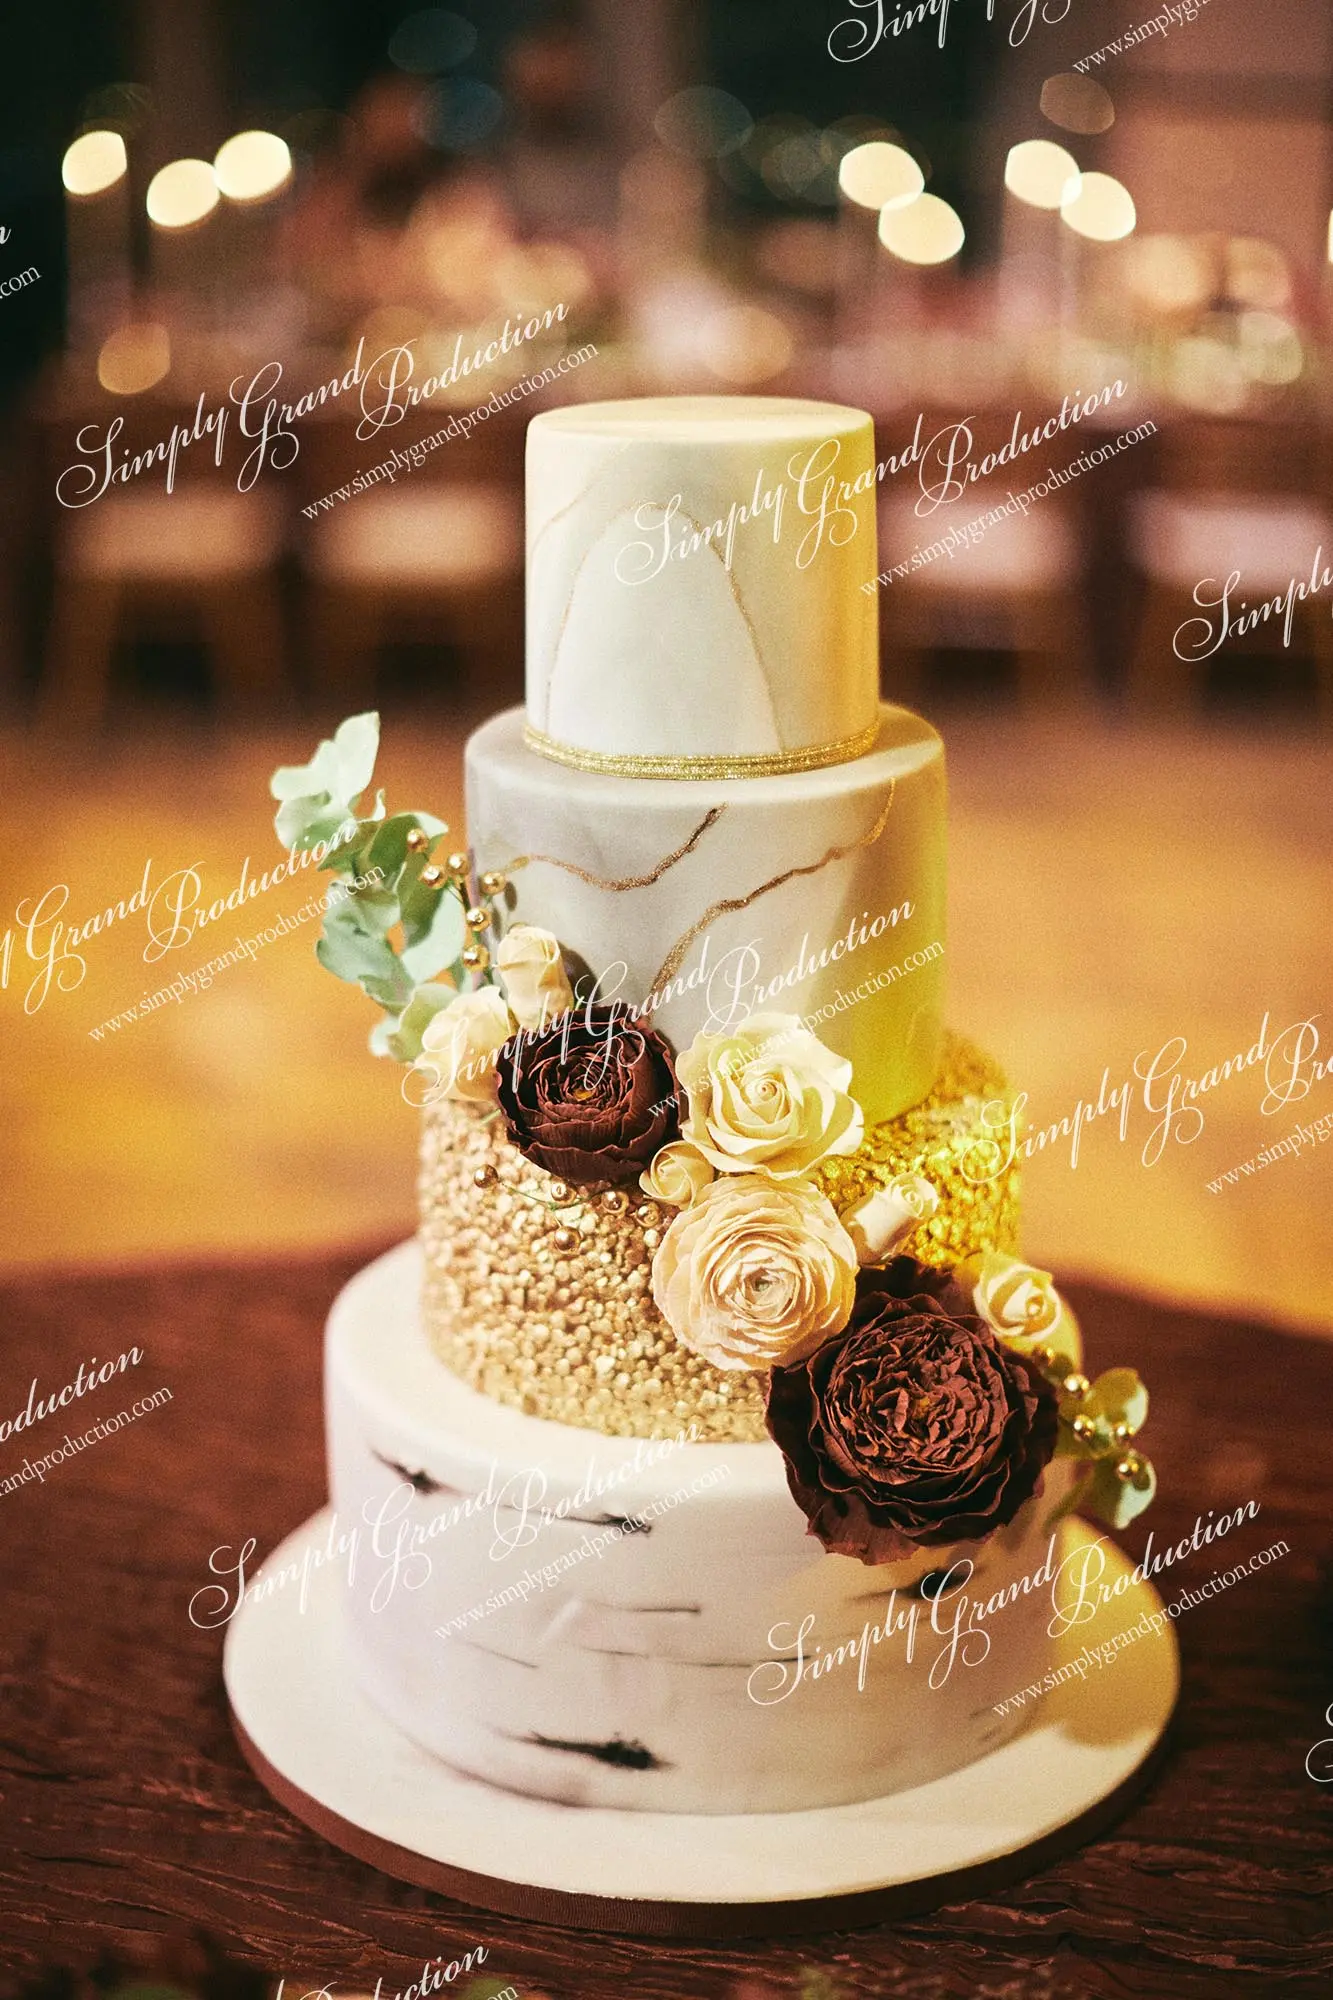 Simply_Grand_Production_Ballroom_wedding_decoration_cake_weddingsweets_marble_burgundy_yellow_gold_rim_1_2_wm